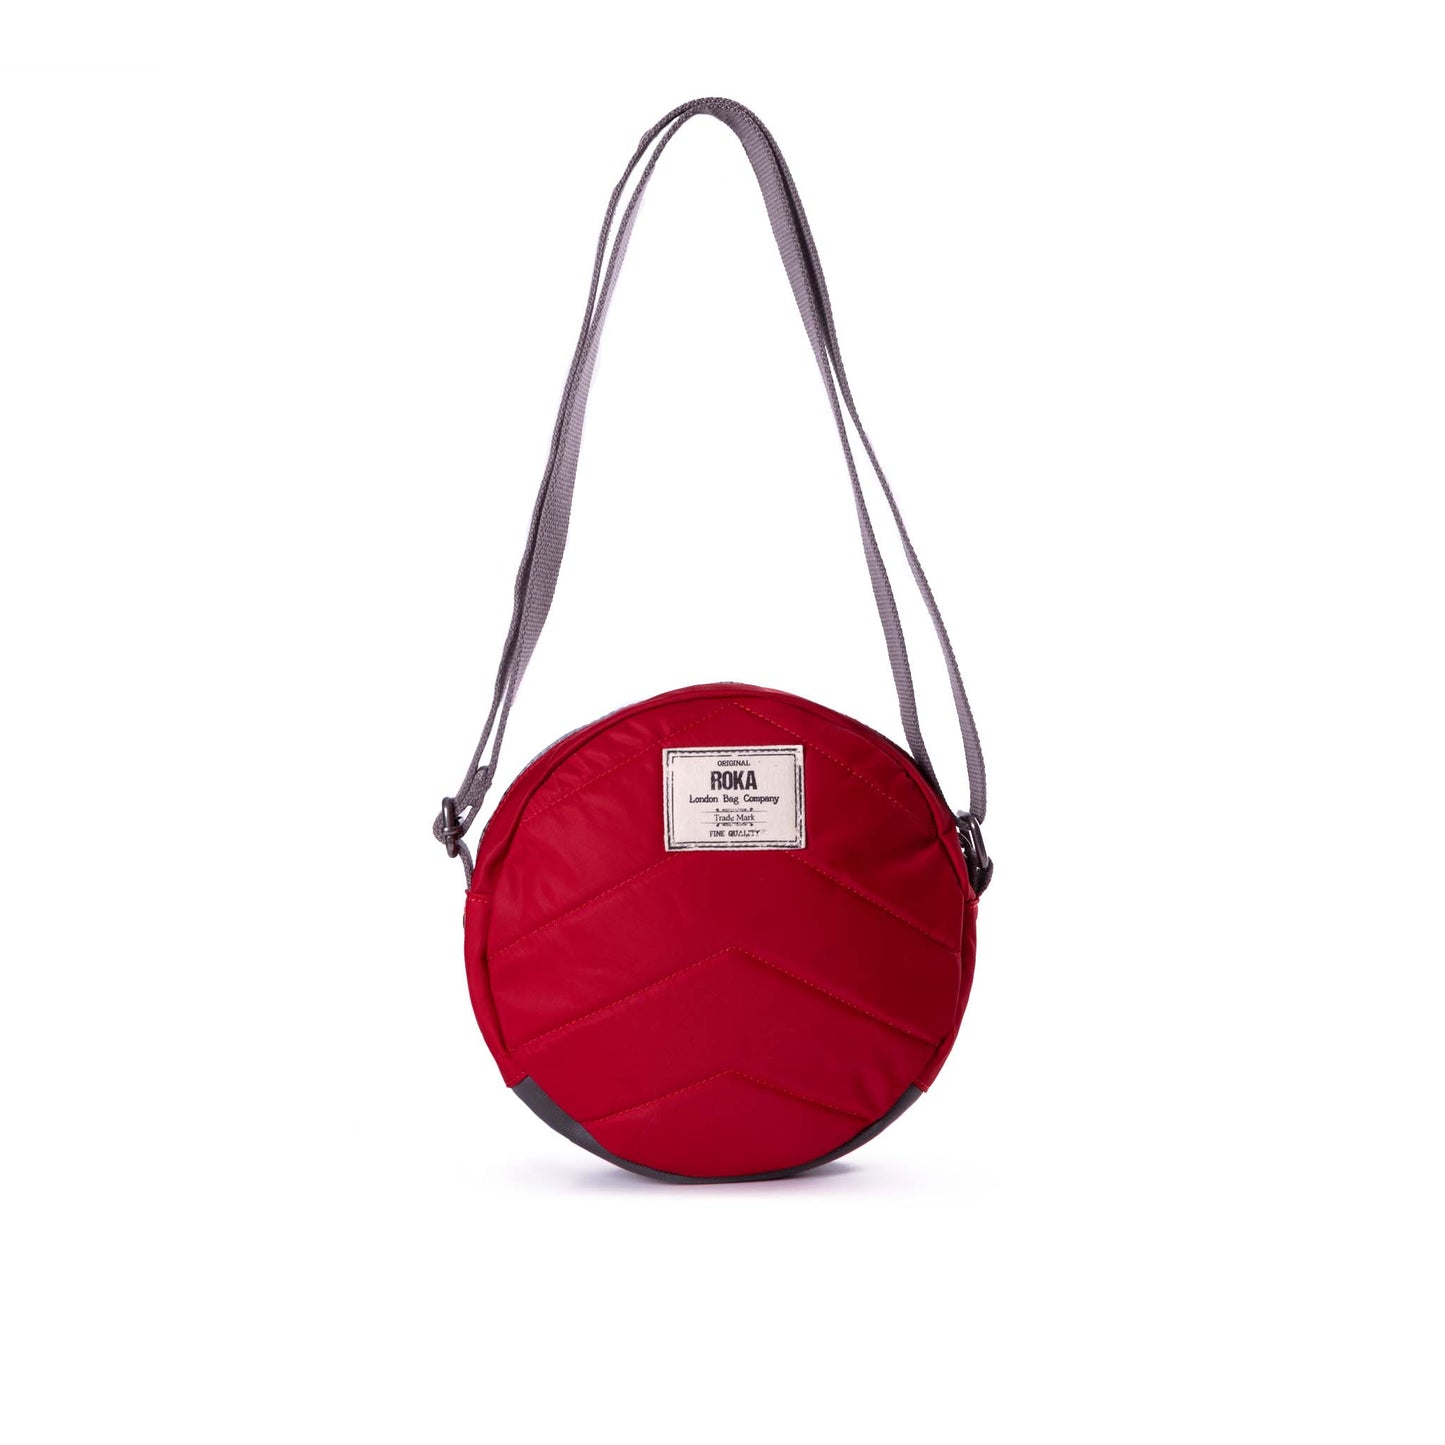 Roka London Paddington Crossbody Bag, Cranberry Red